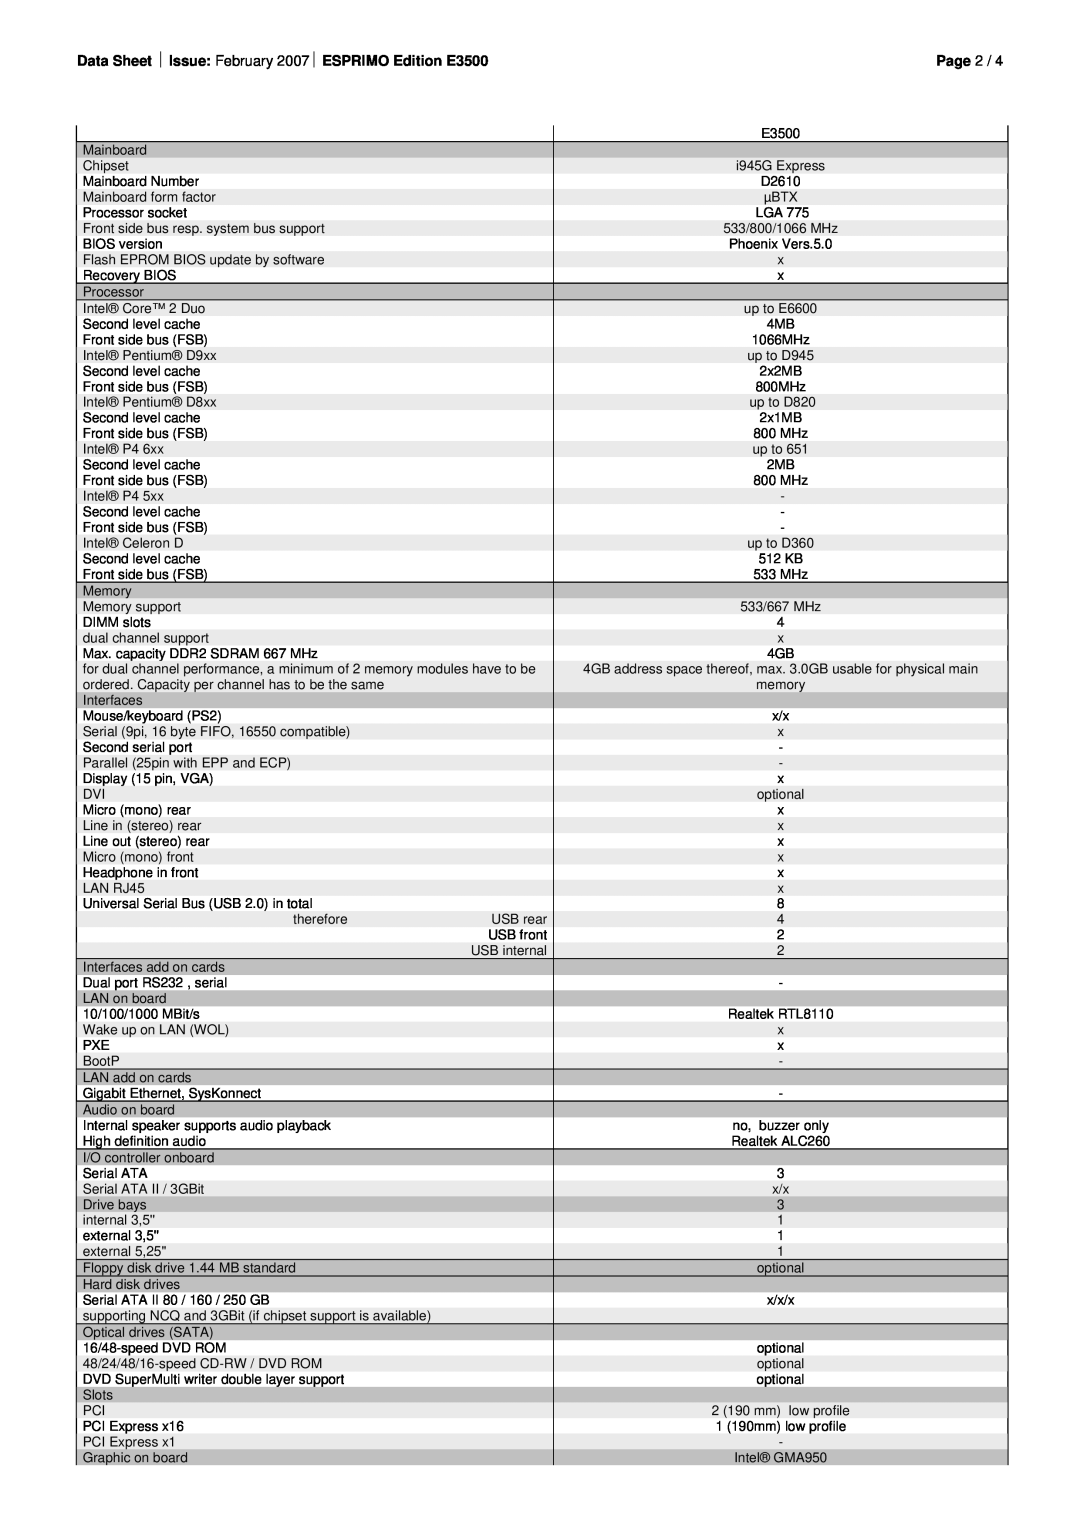 Fujitsu Siemens Computers manual Data Sheet Issue February 2007 ESPRIMO Edition E3500, Page 